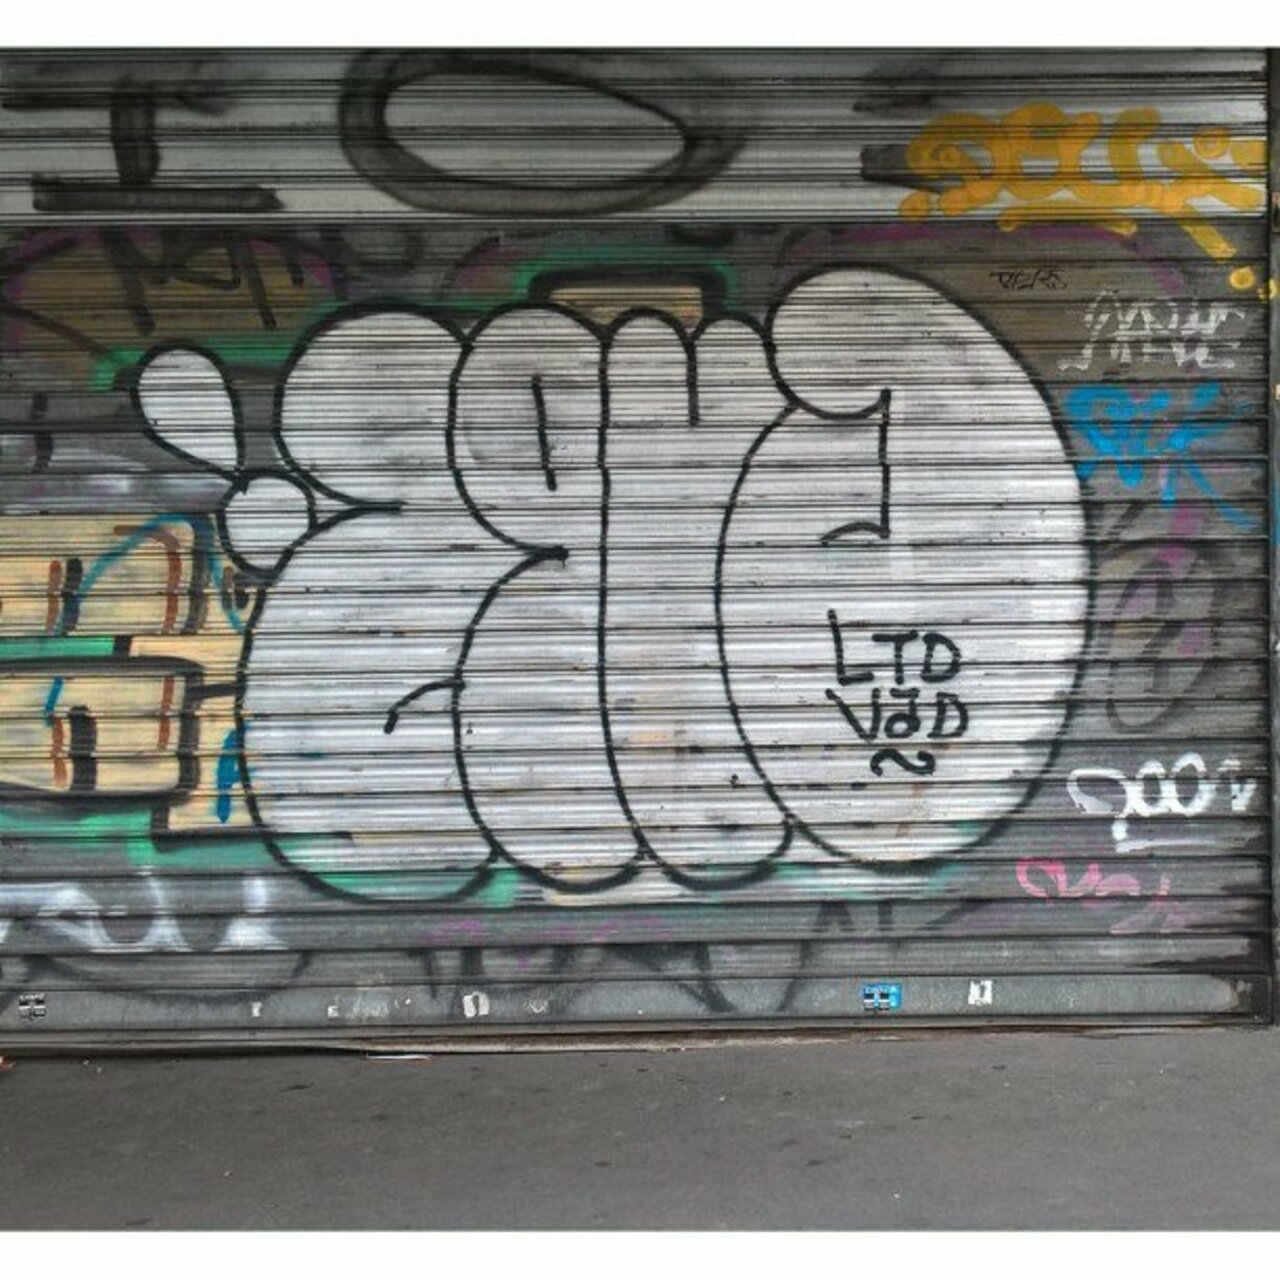 GUES Reverse
#streetart #graffiti #graff #art #fatcap #bombing #sprayart #spraycanart #wallart #handstyle #letterin… https://t.co/0Obxx10YP4